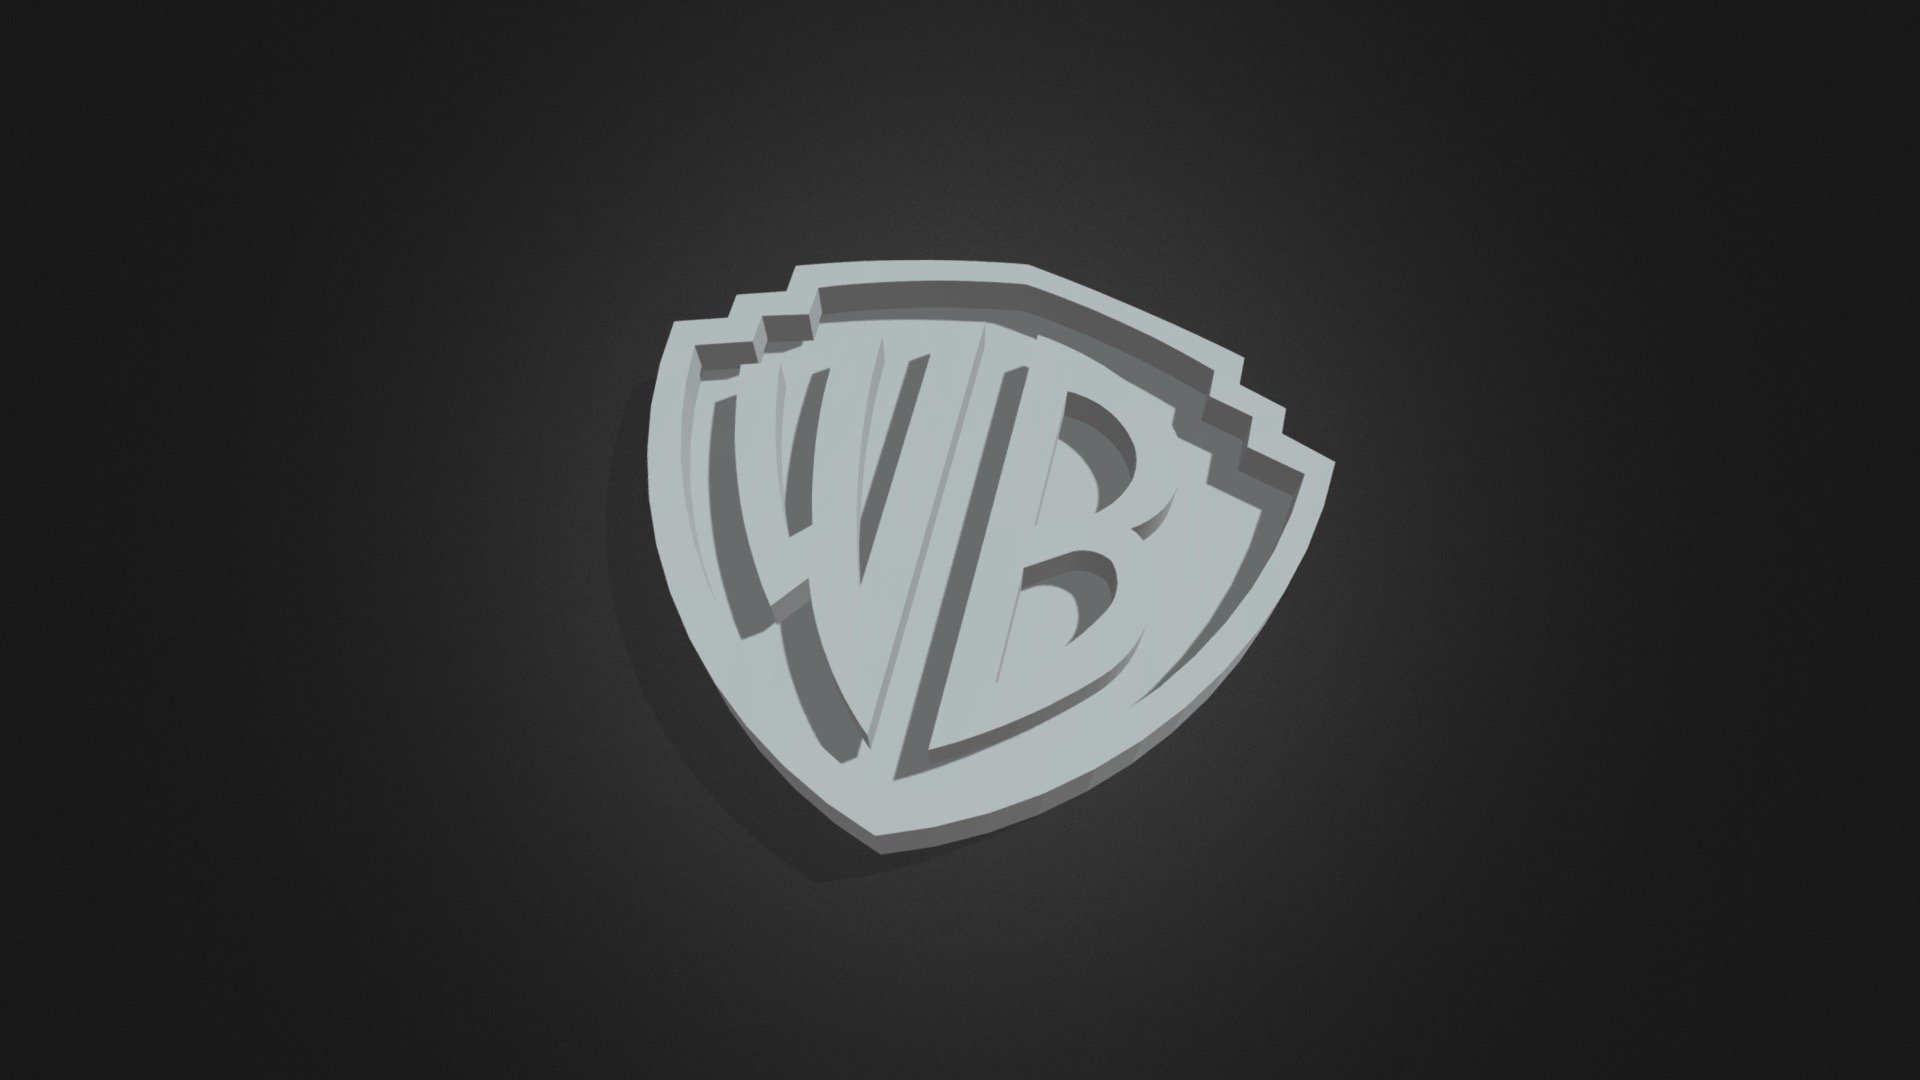 Warner Bros logo 3D model by llllline (llllline